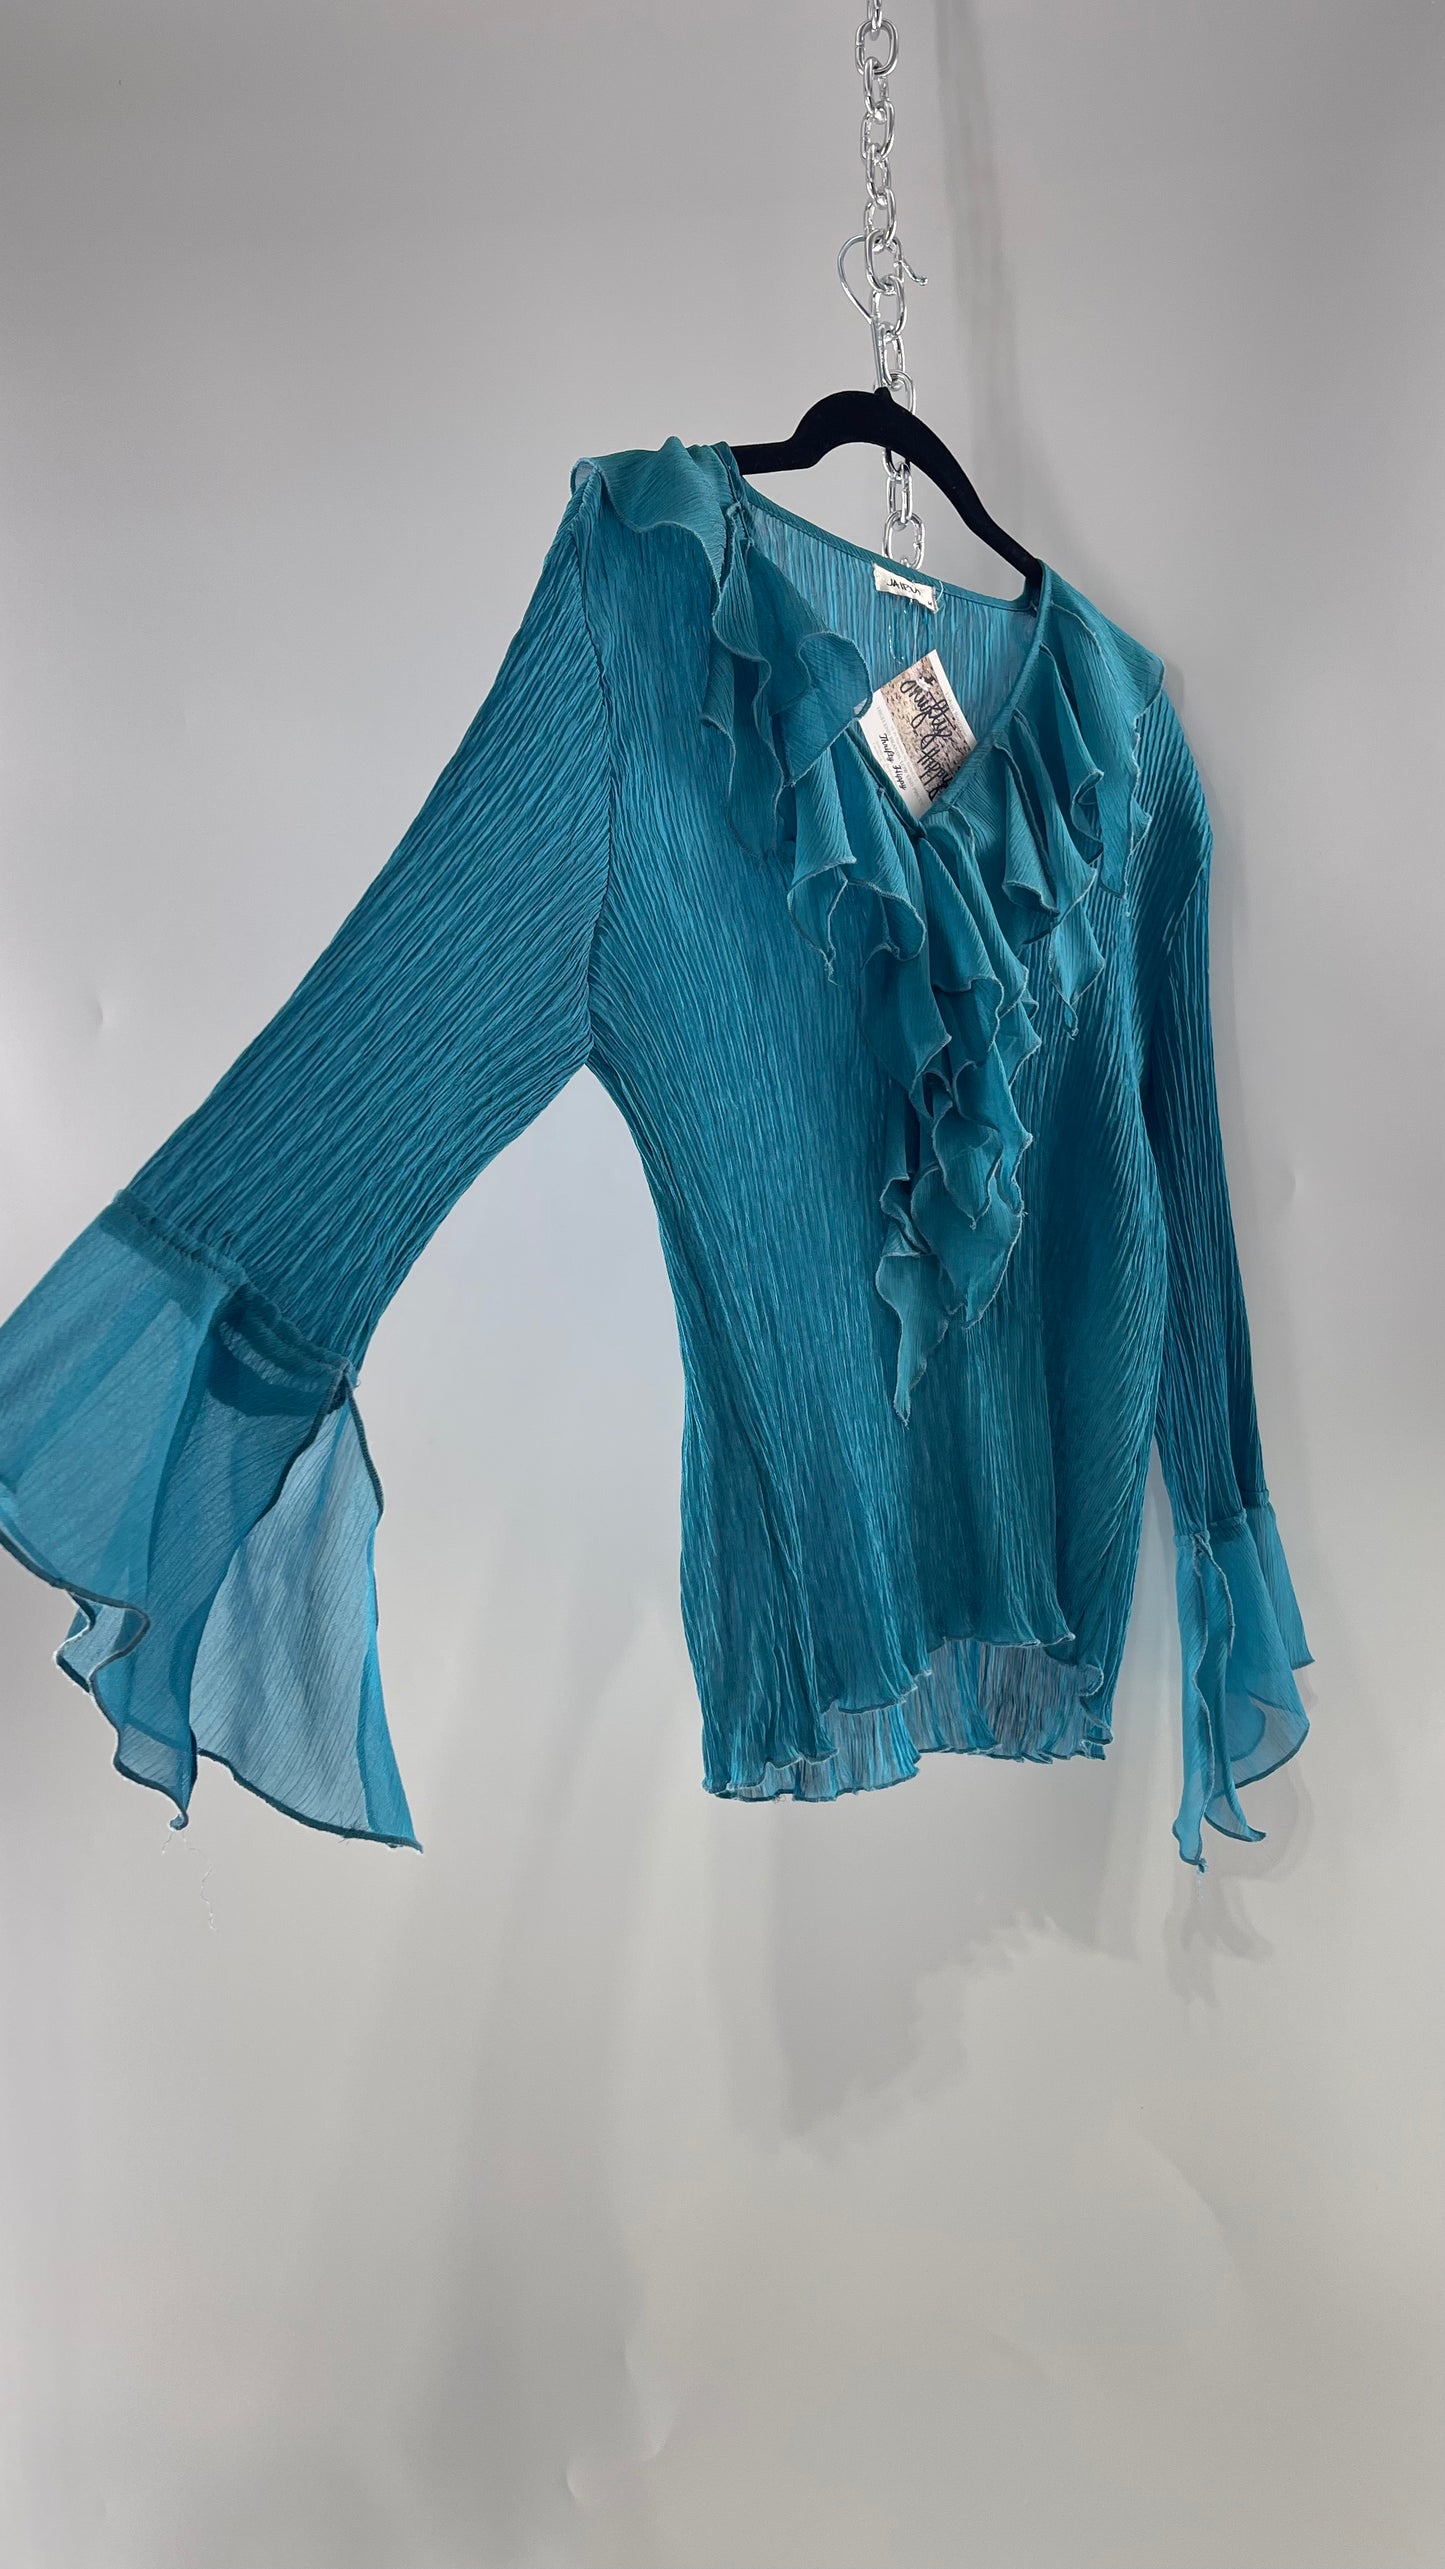 Vintage Jaipur Blue Crimped Blouse with Sheer Handkerchief Cuffs and Ruffled Neckline (Medium)